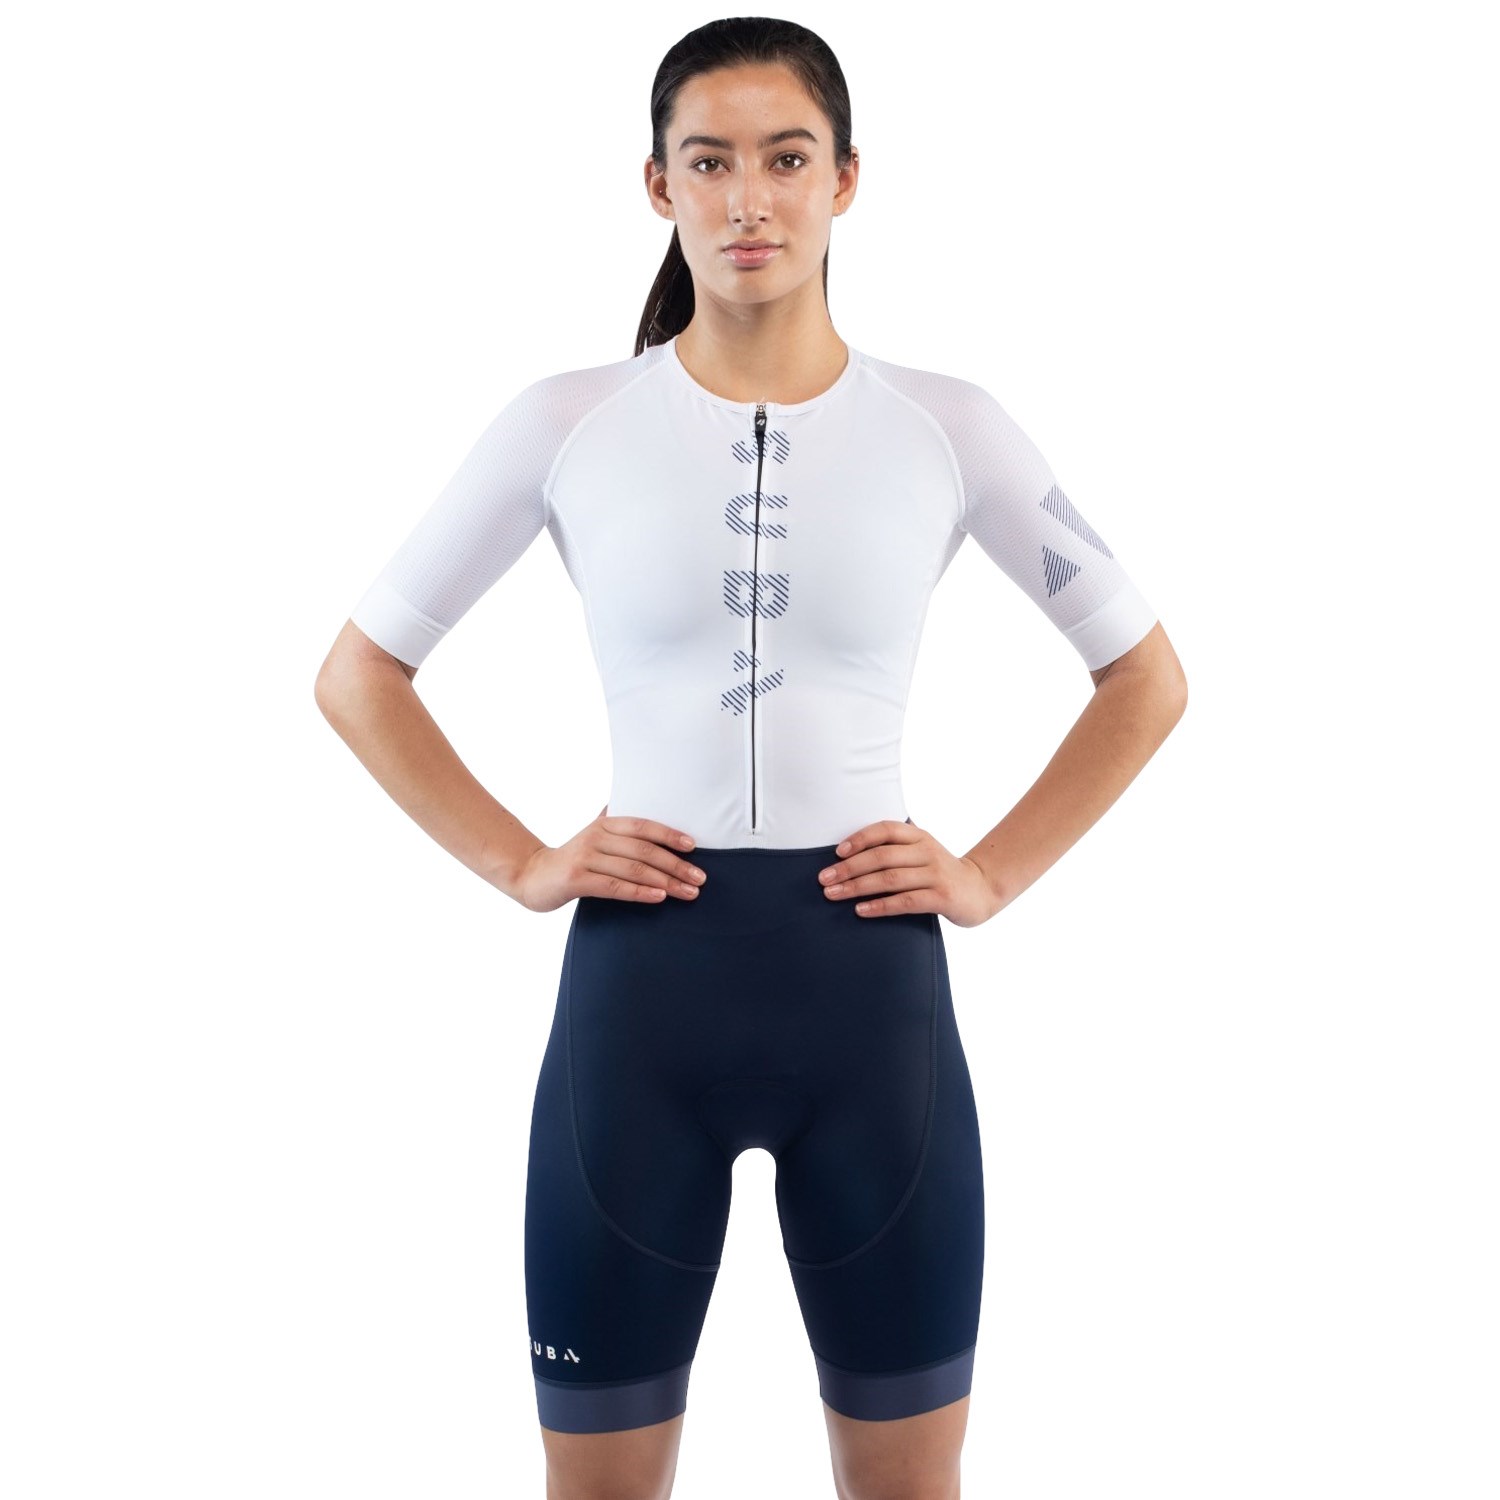 Sub4 Sleeved Womens Triathlon Speedsuit - White/Navy | Sportitude